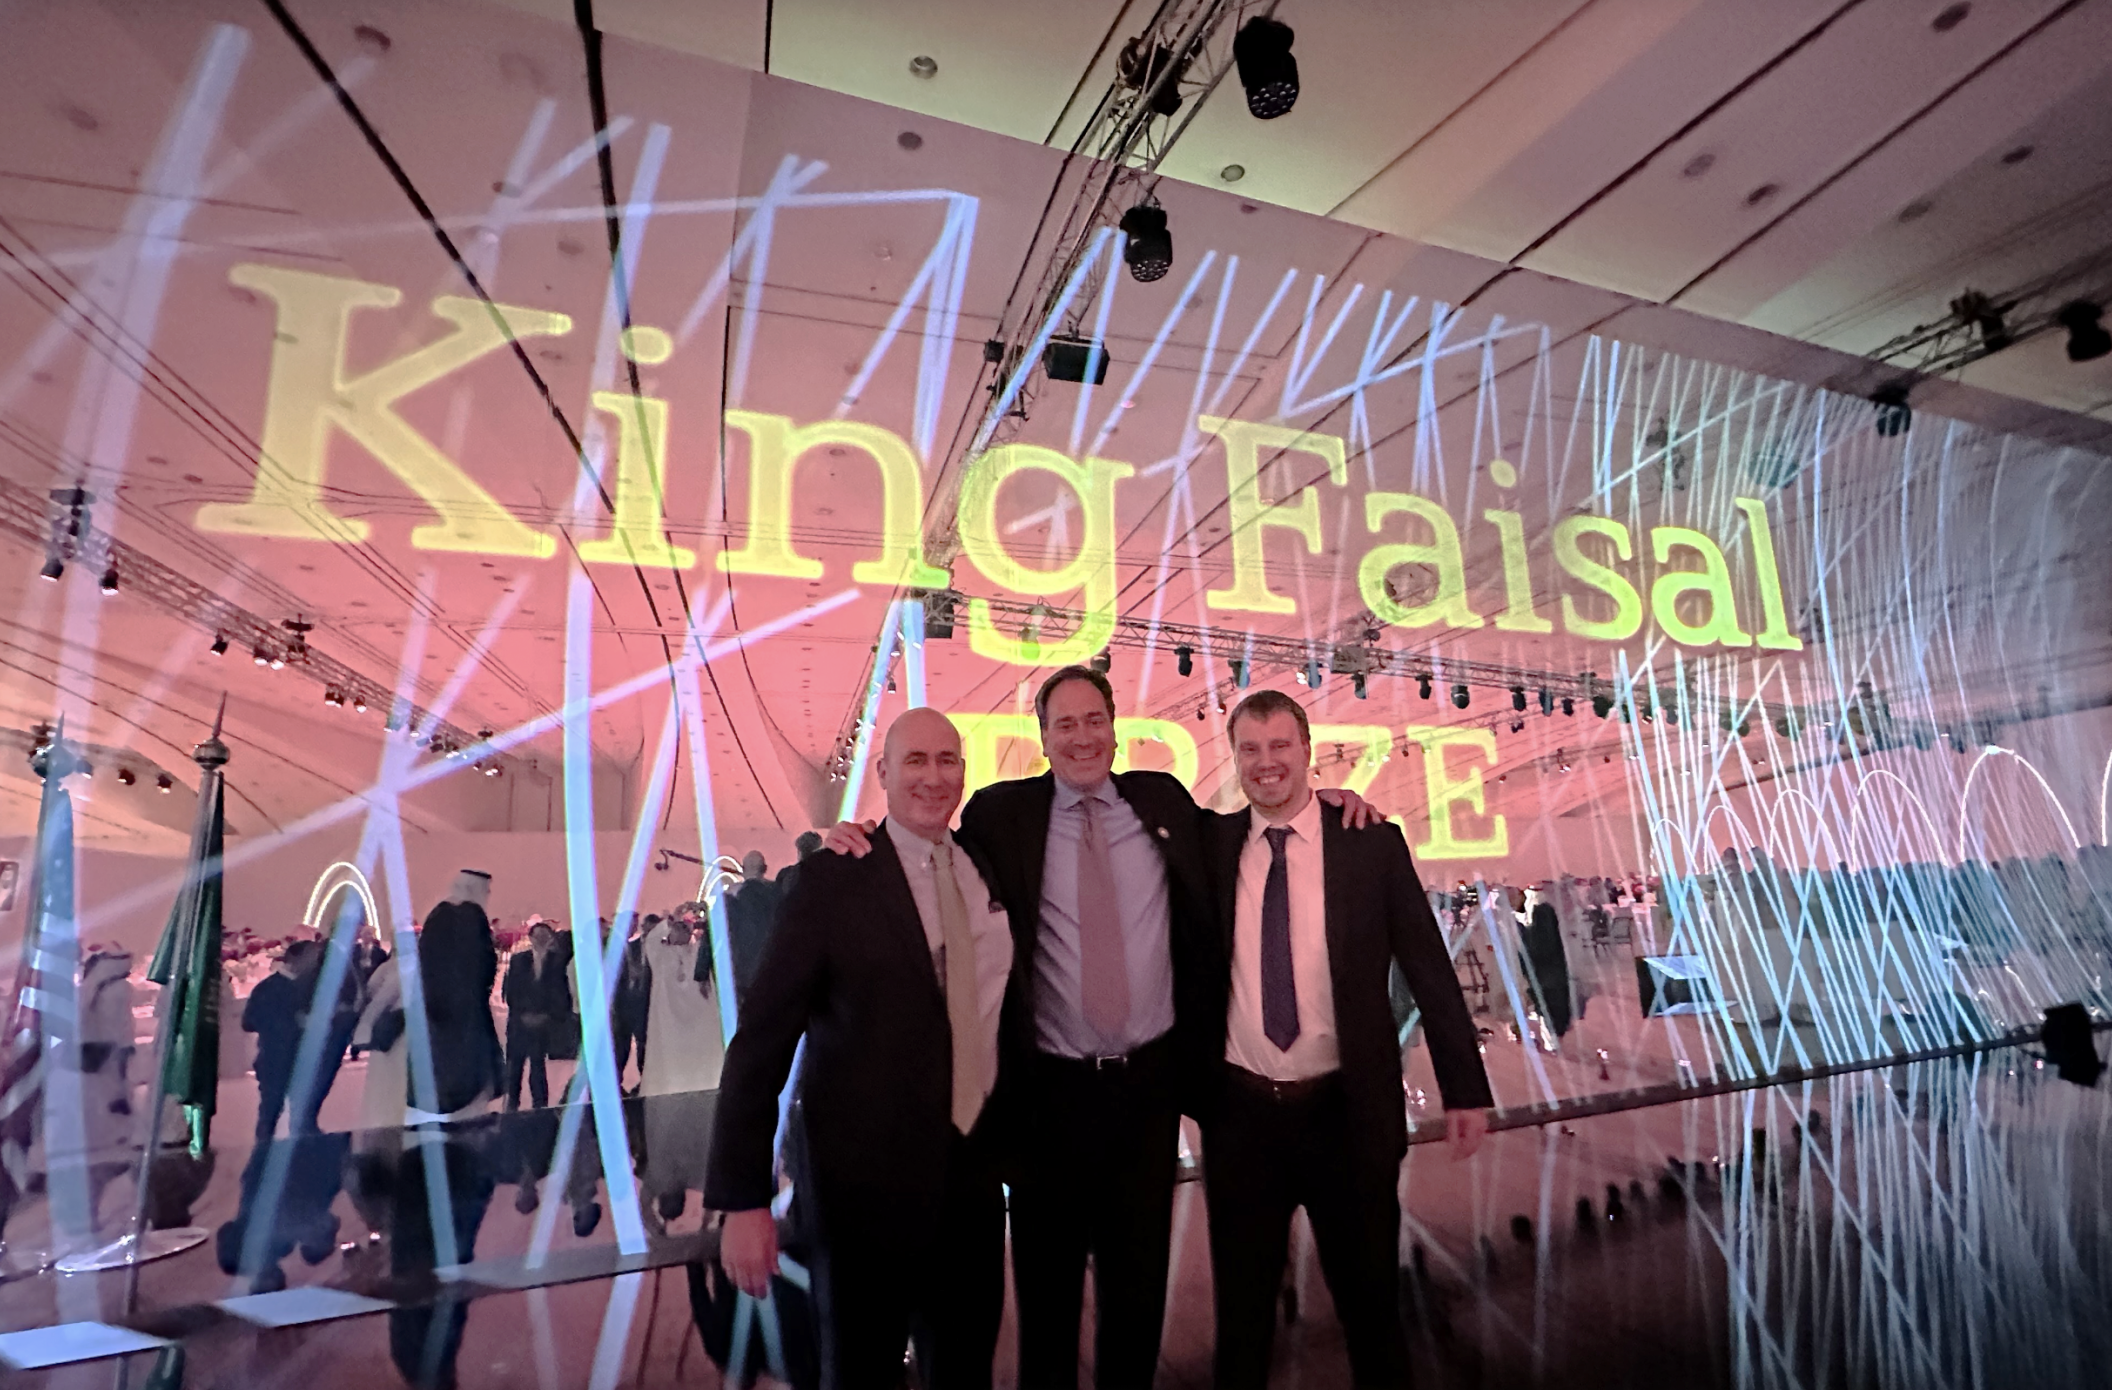 Chad Mirkin and team at King Faisal Award Celebration